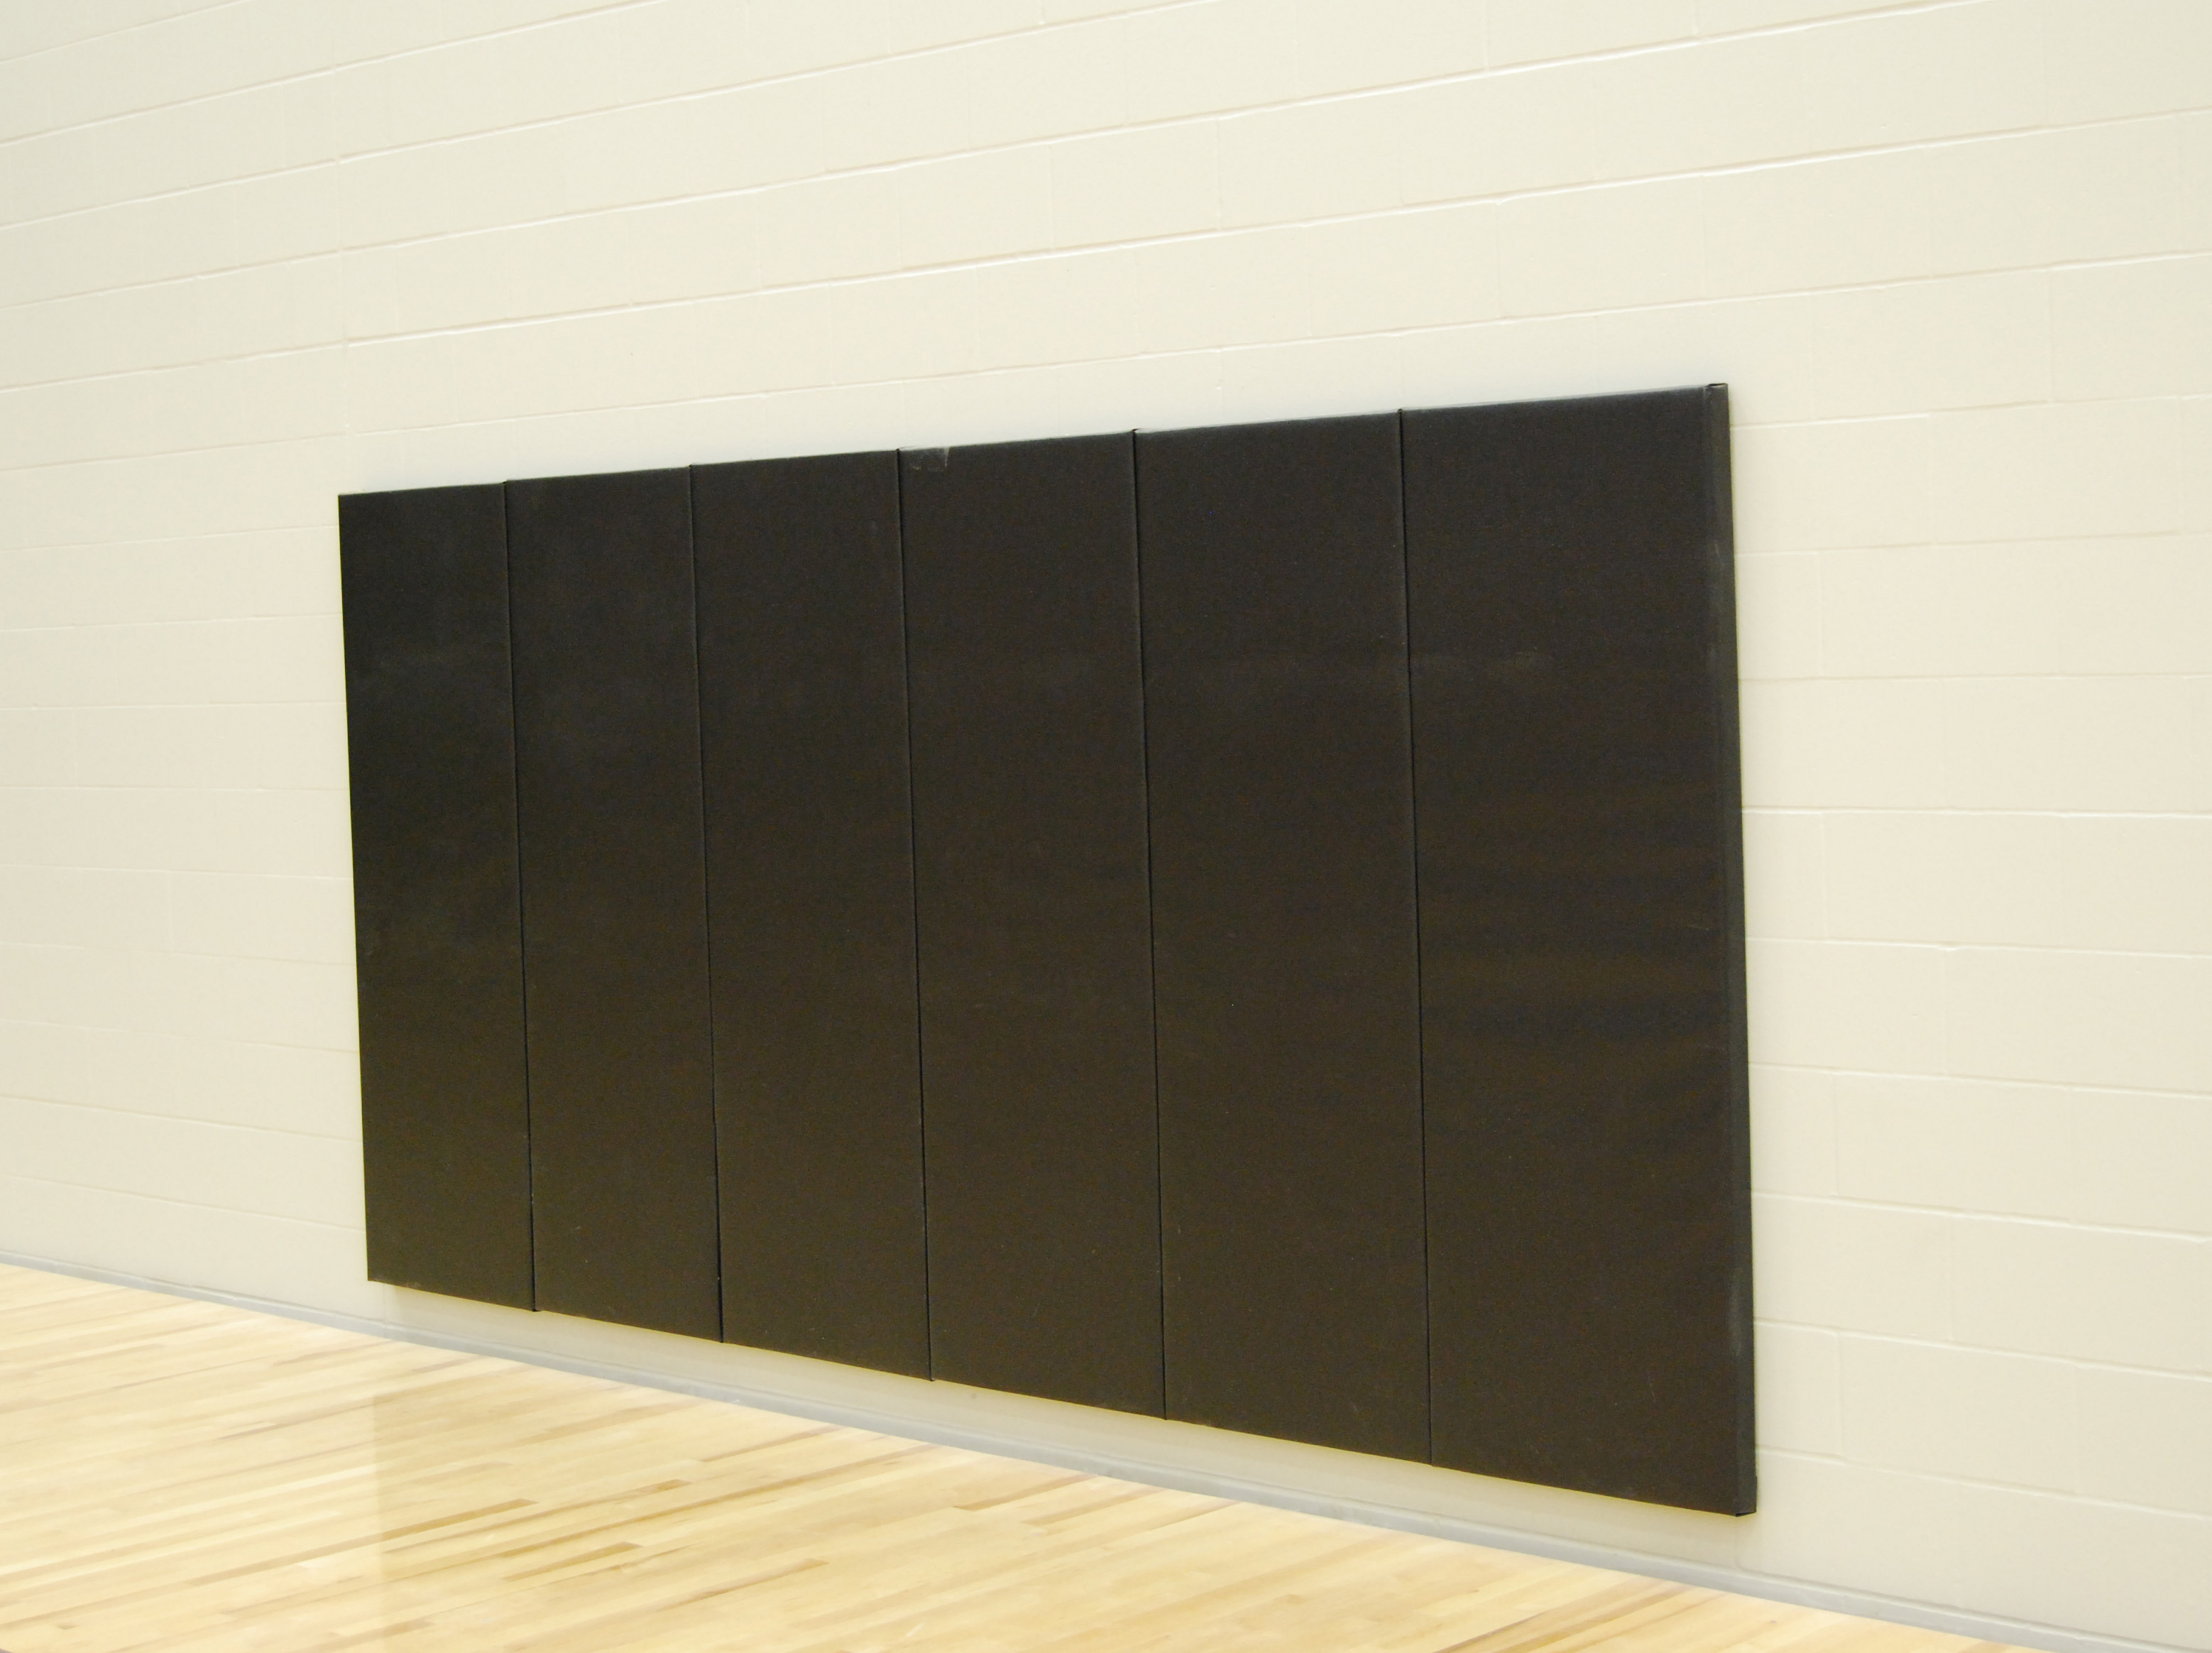 Wood Backed Gym Wall Padding Panels 2' x 7